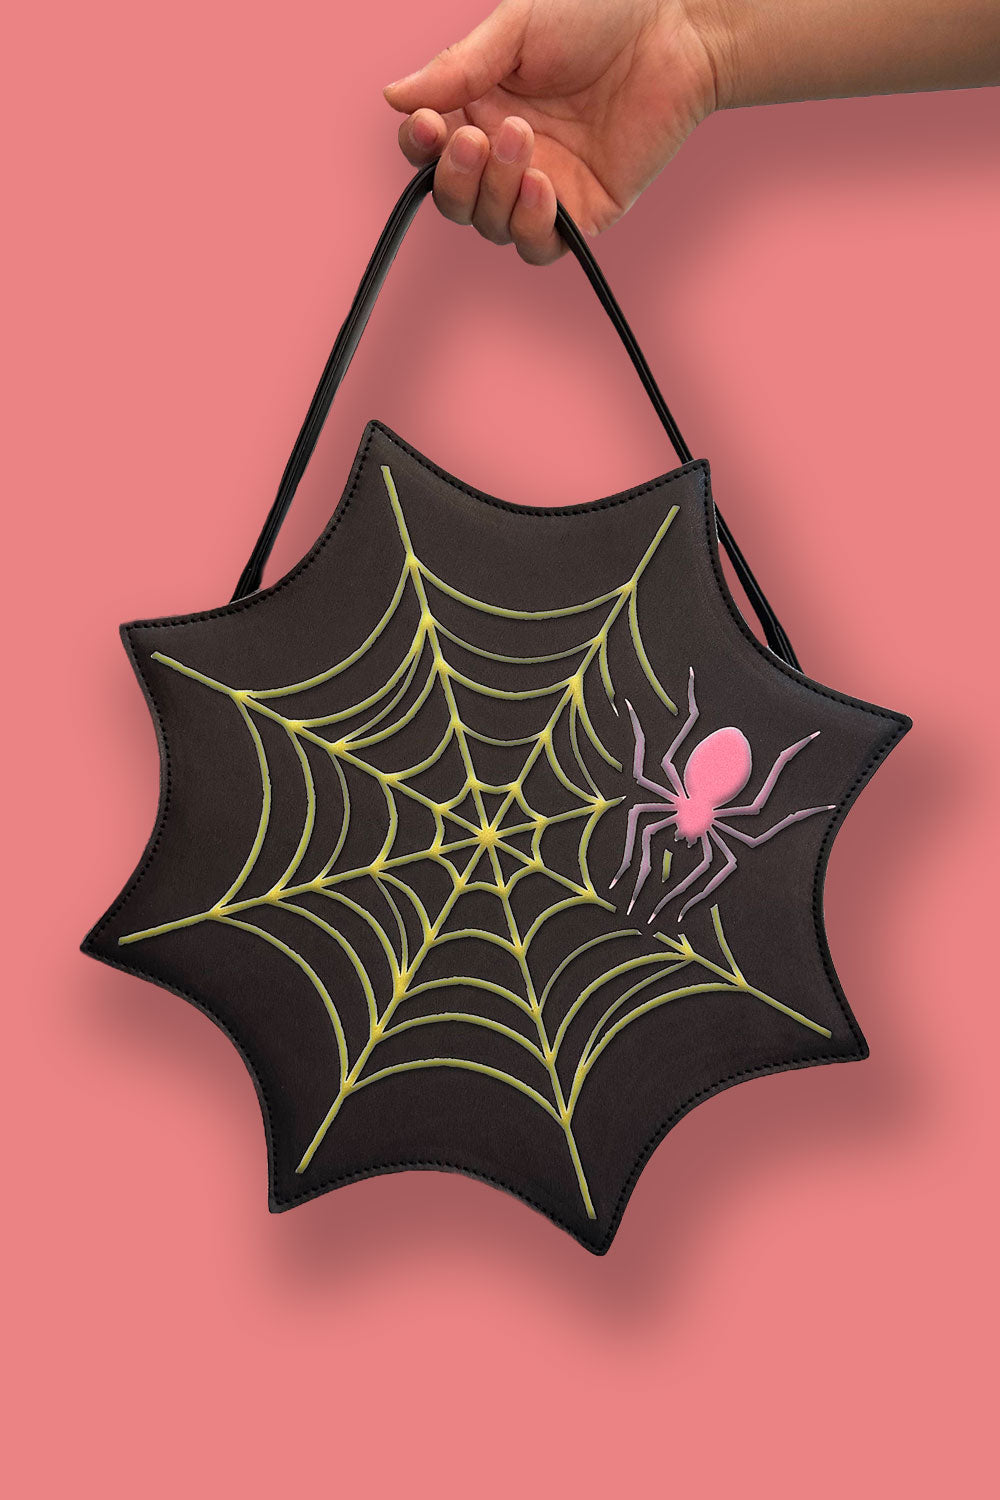 The Grand Halloween Spiderweb Purse